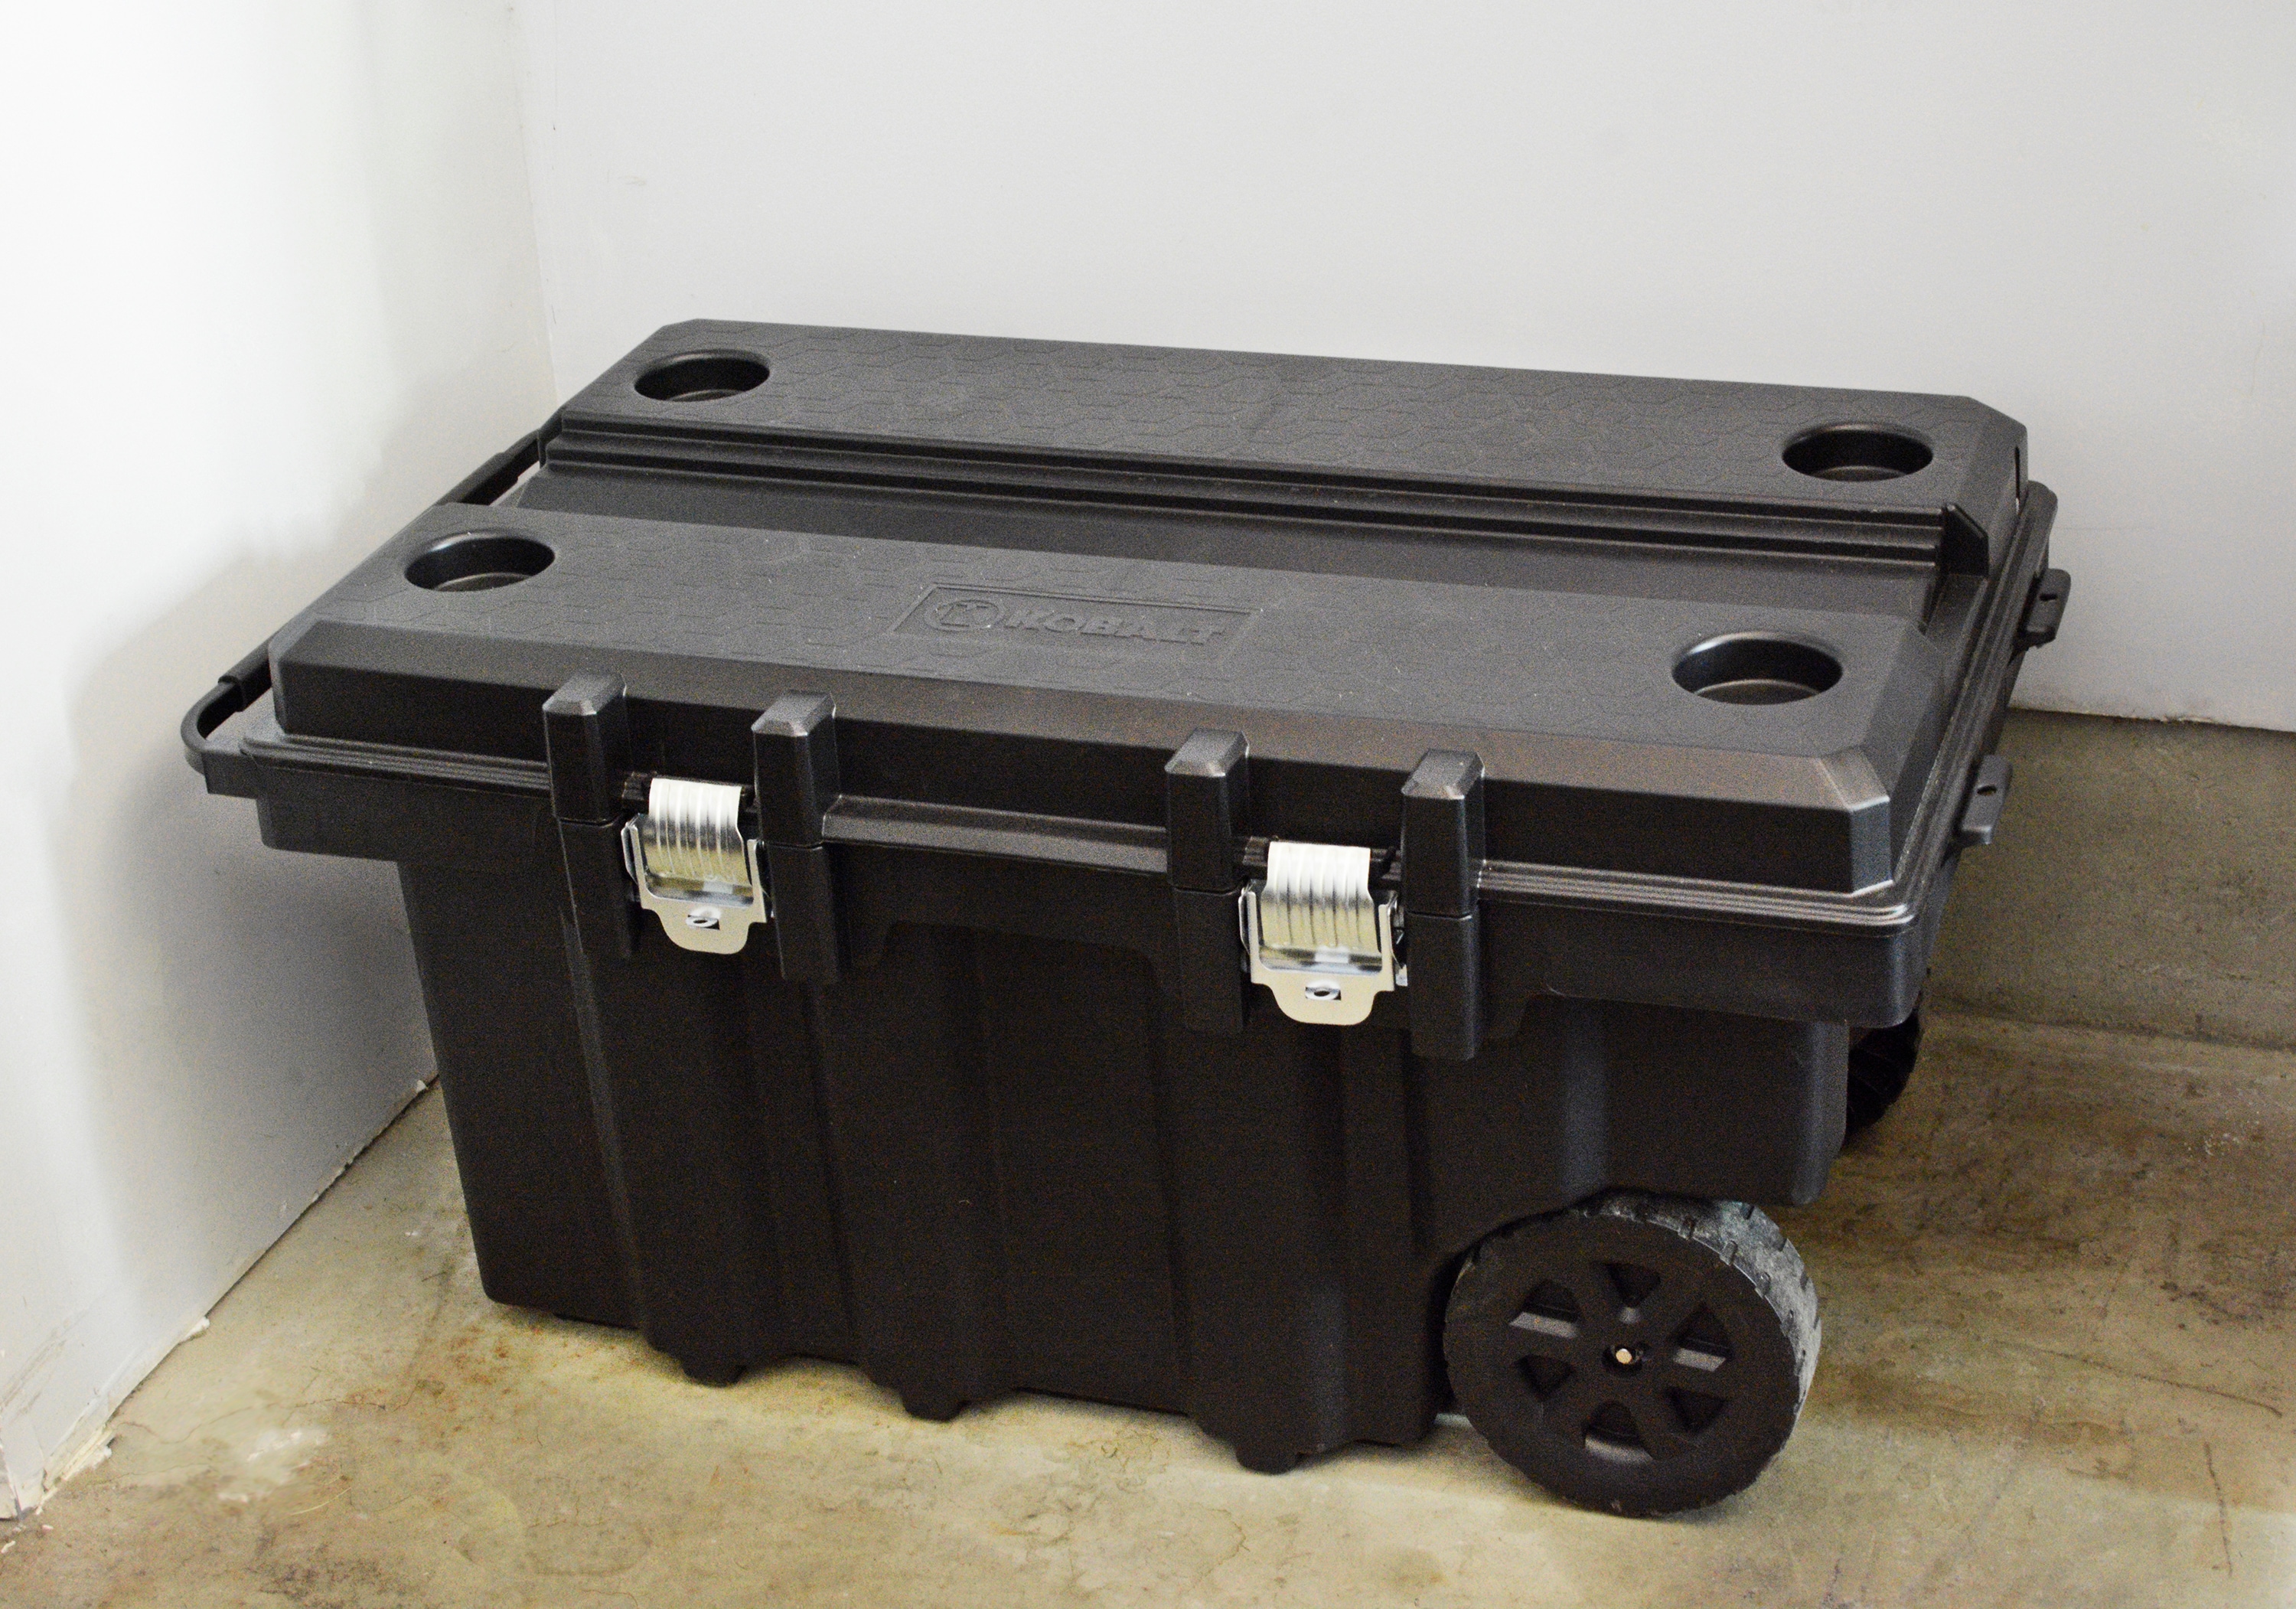 Kobalt 30.5-in Black Plastic Wheels Lockable Tool Box at